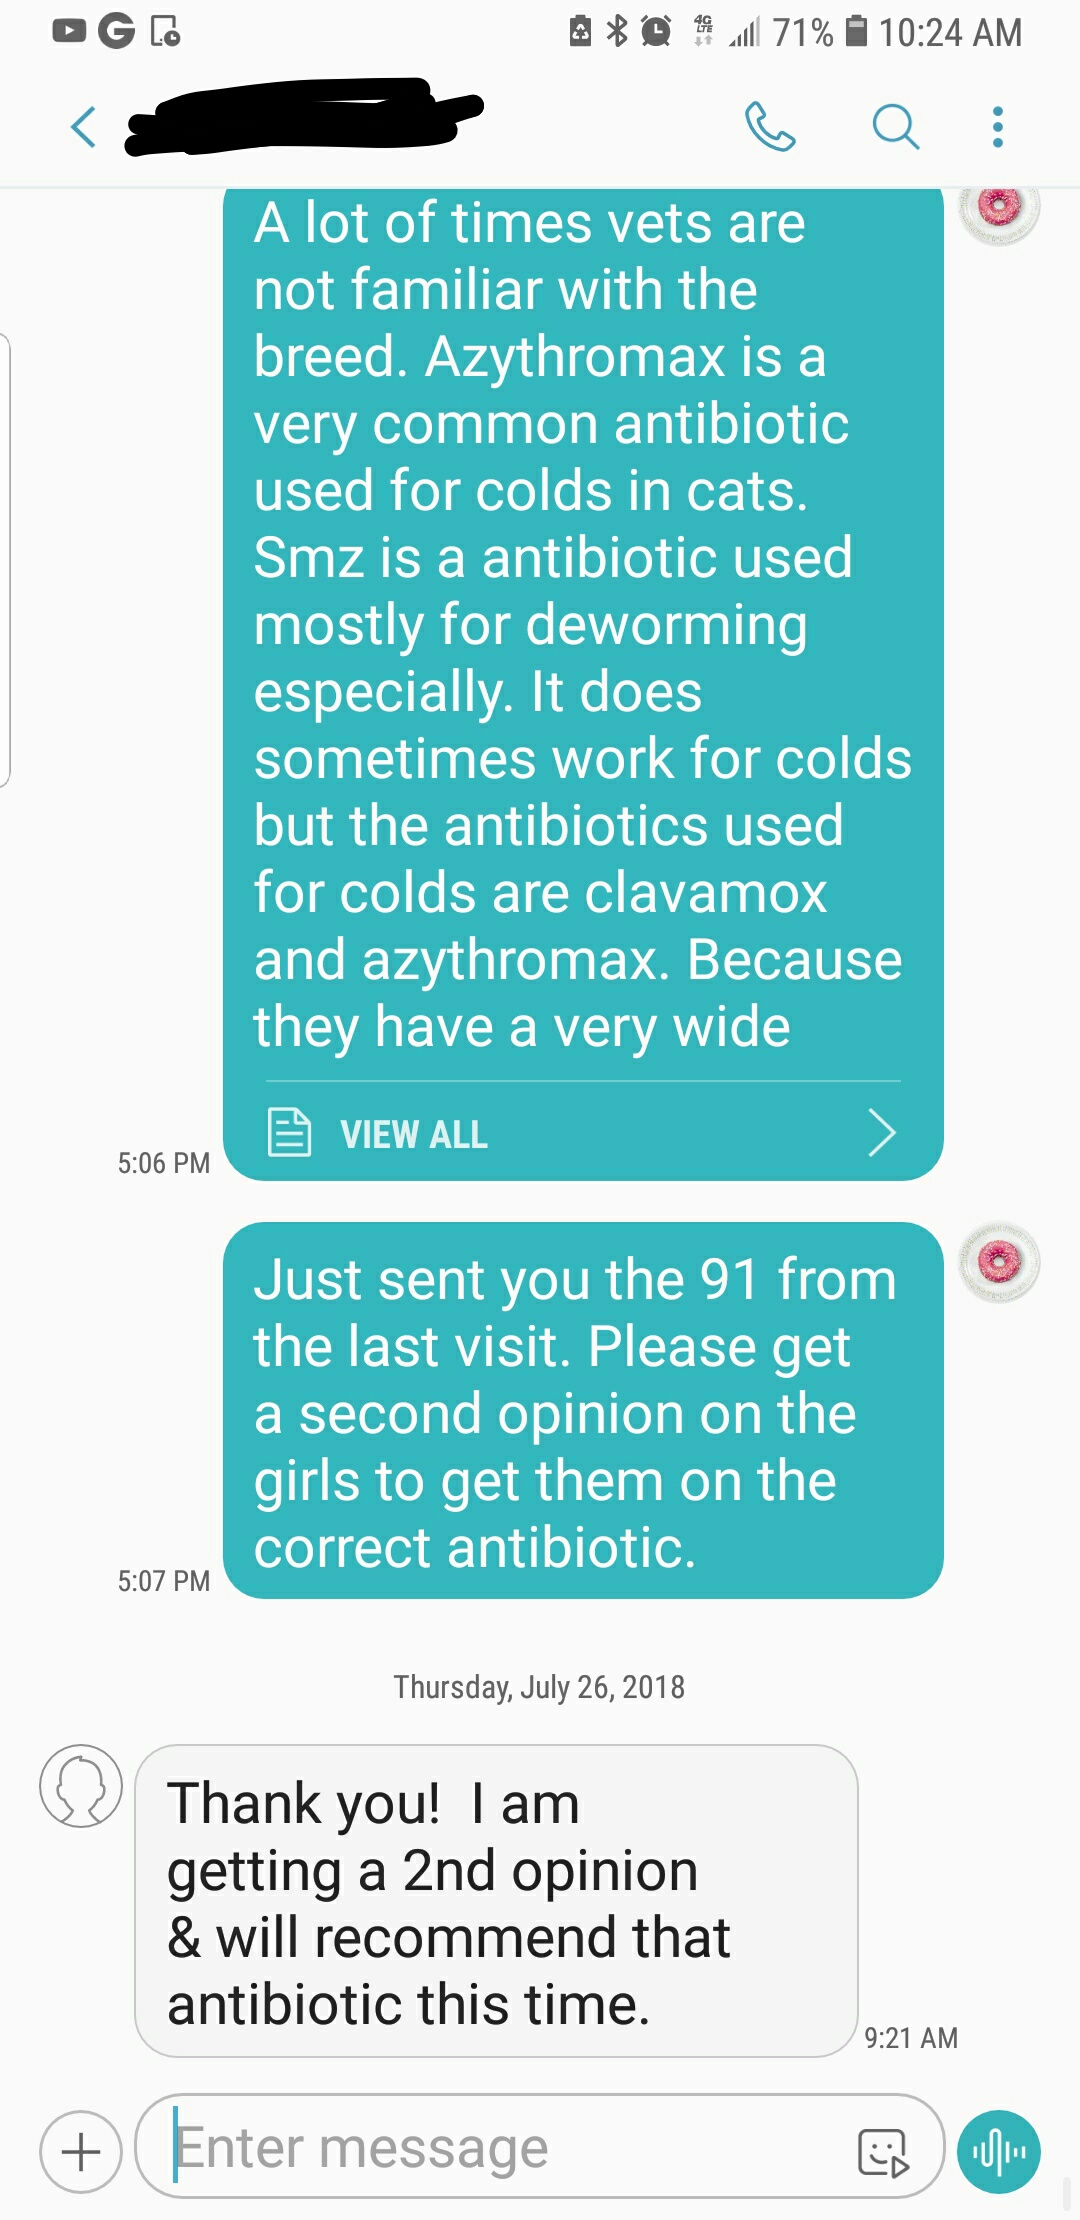 Pg2of2 proper antibiotics not given